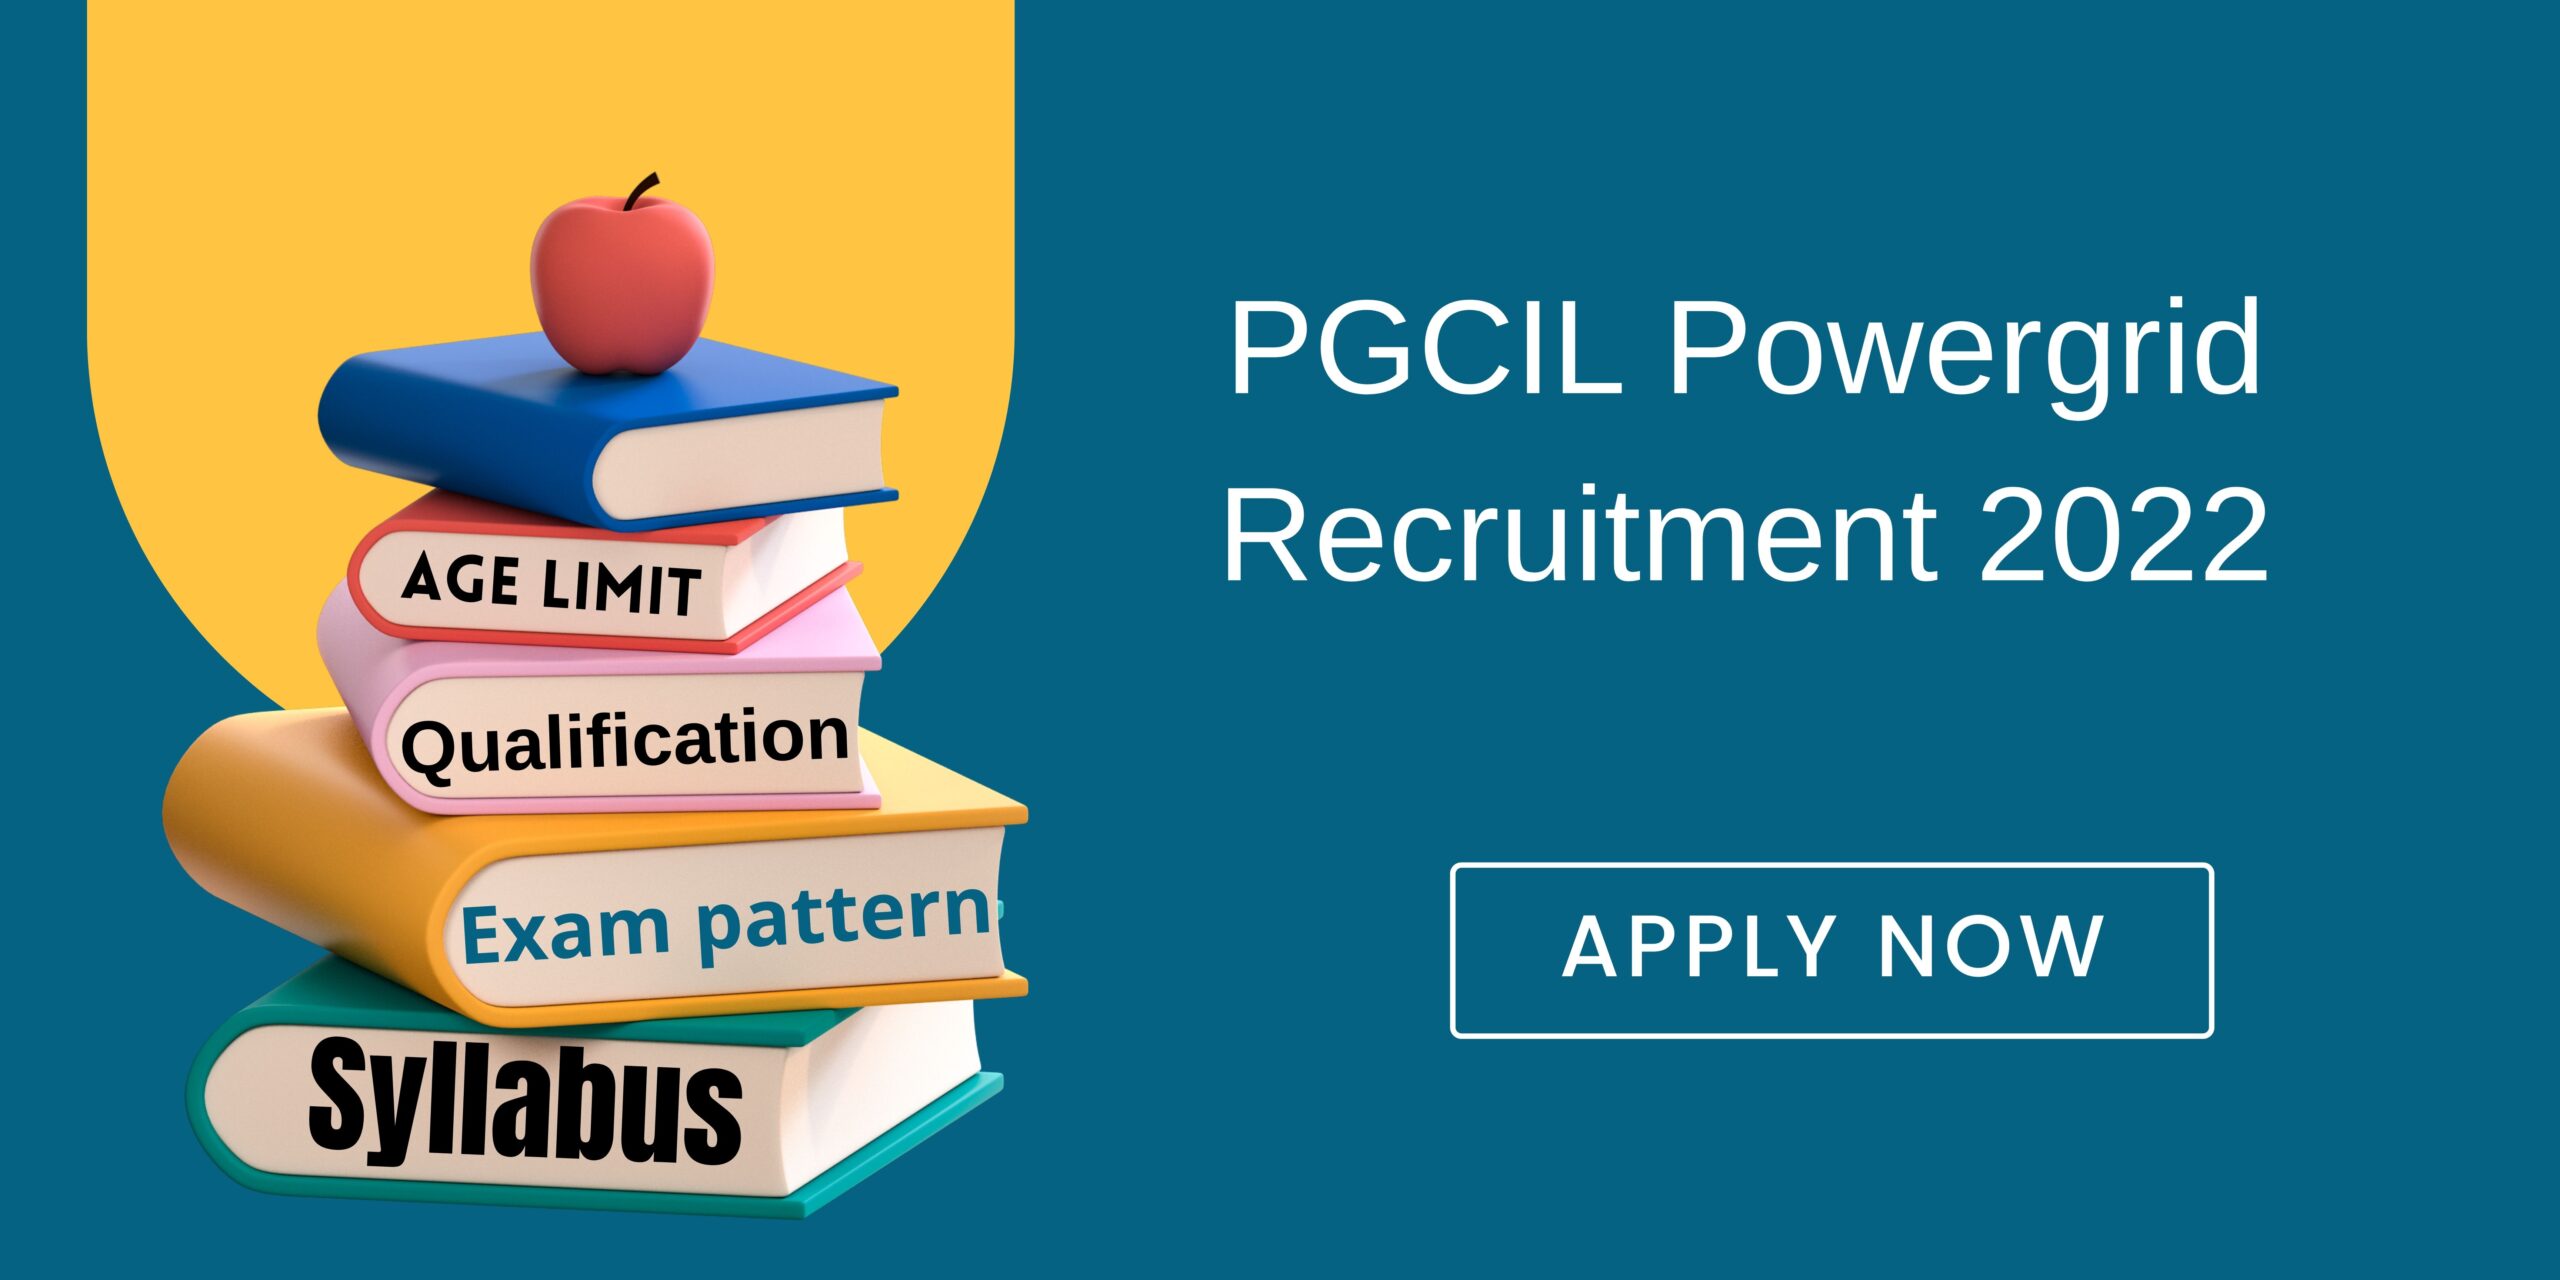 PGCIL Powergrid Recruitment 2022